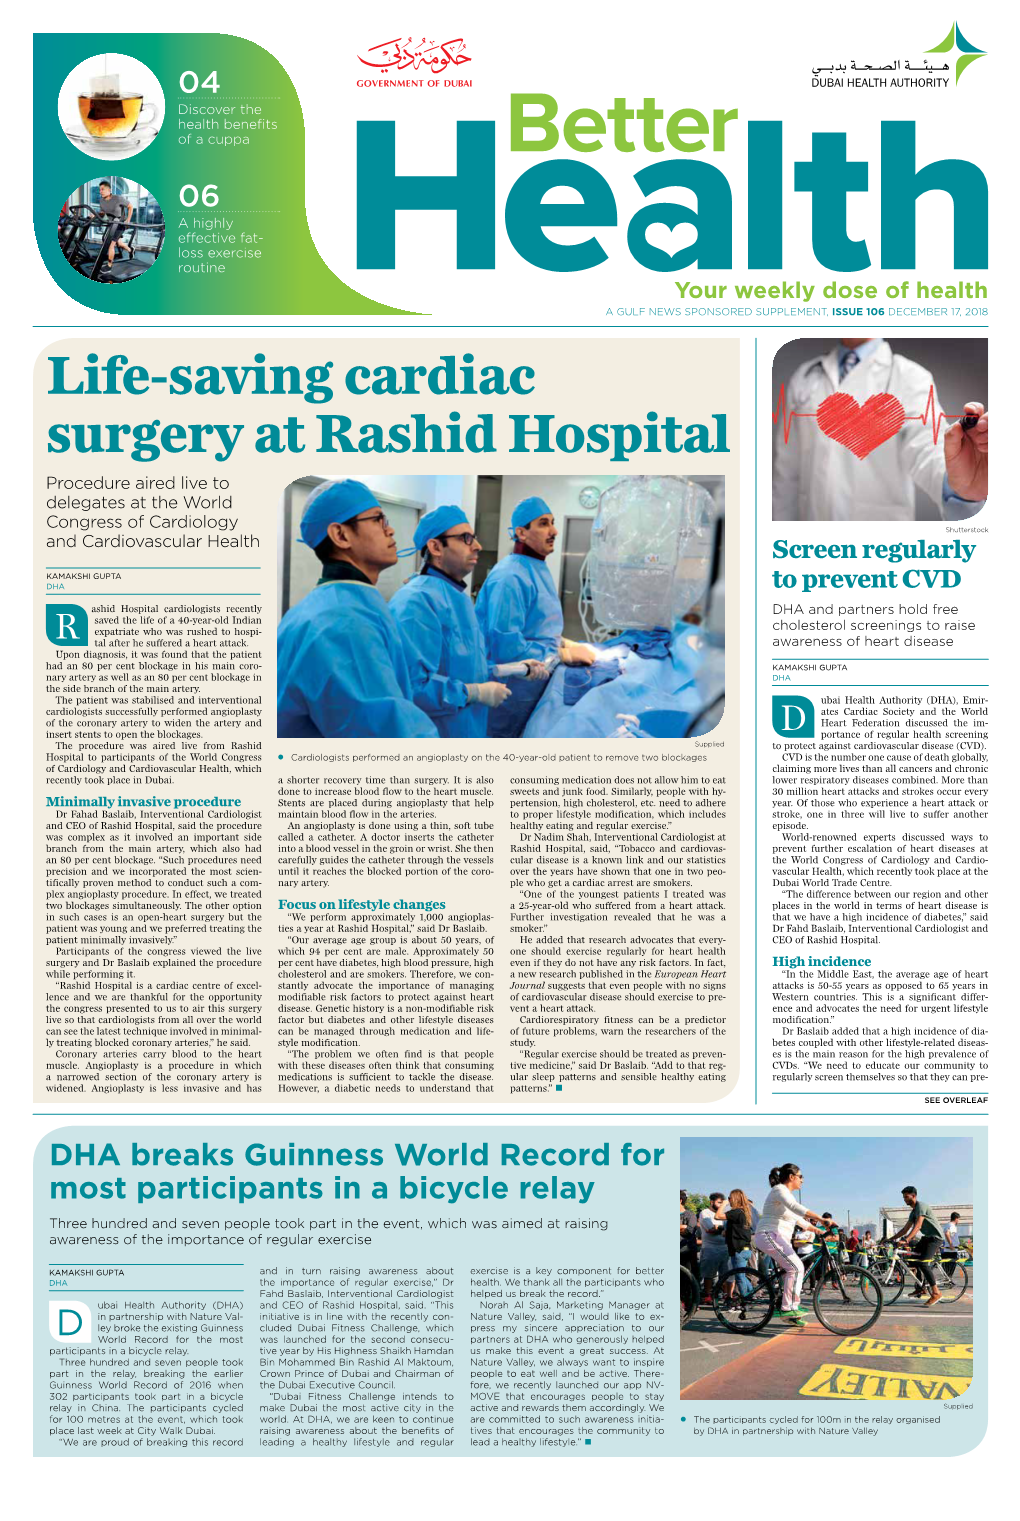 Life-Saving Cardiac Surgery at Rashid Hospital Procedure Aired Live to Delegates at the World